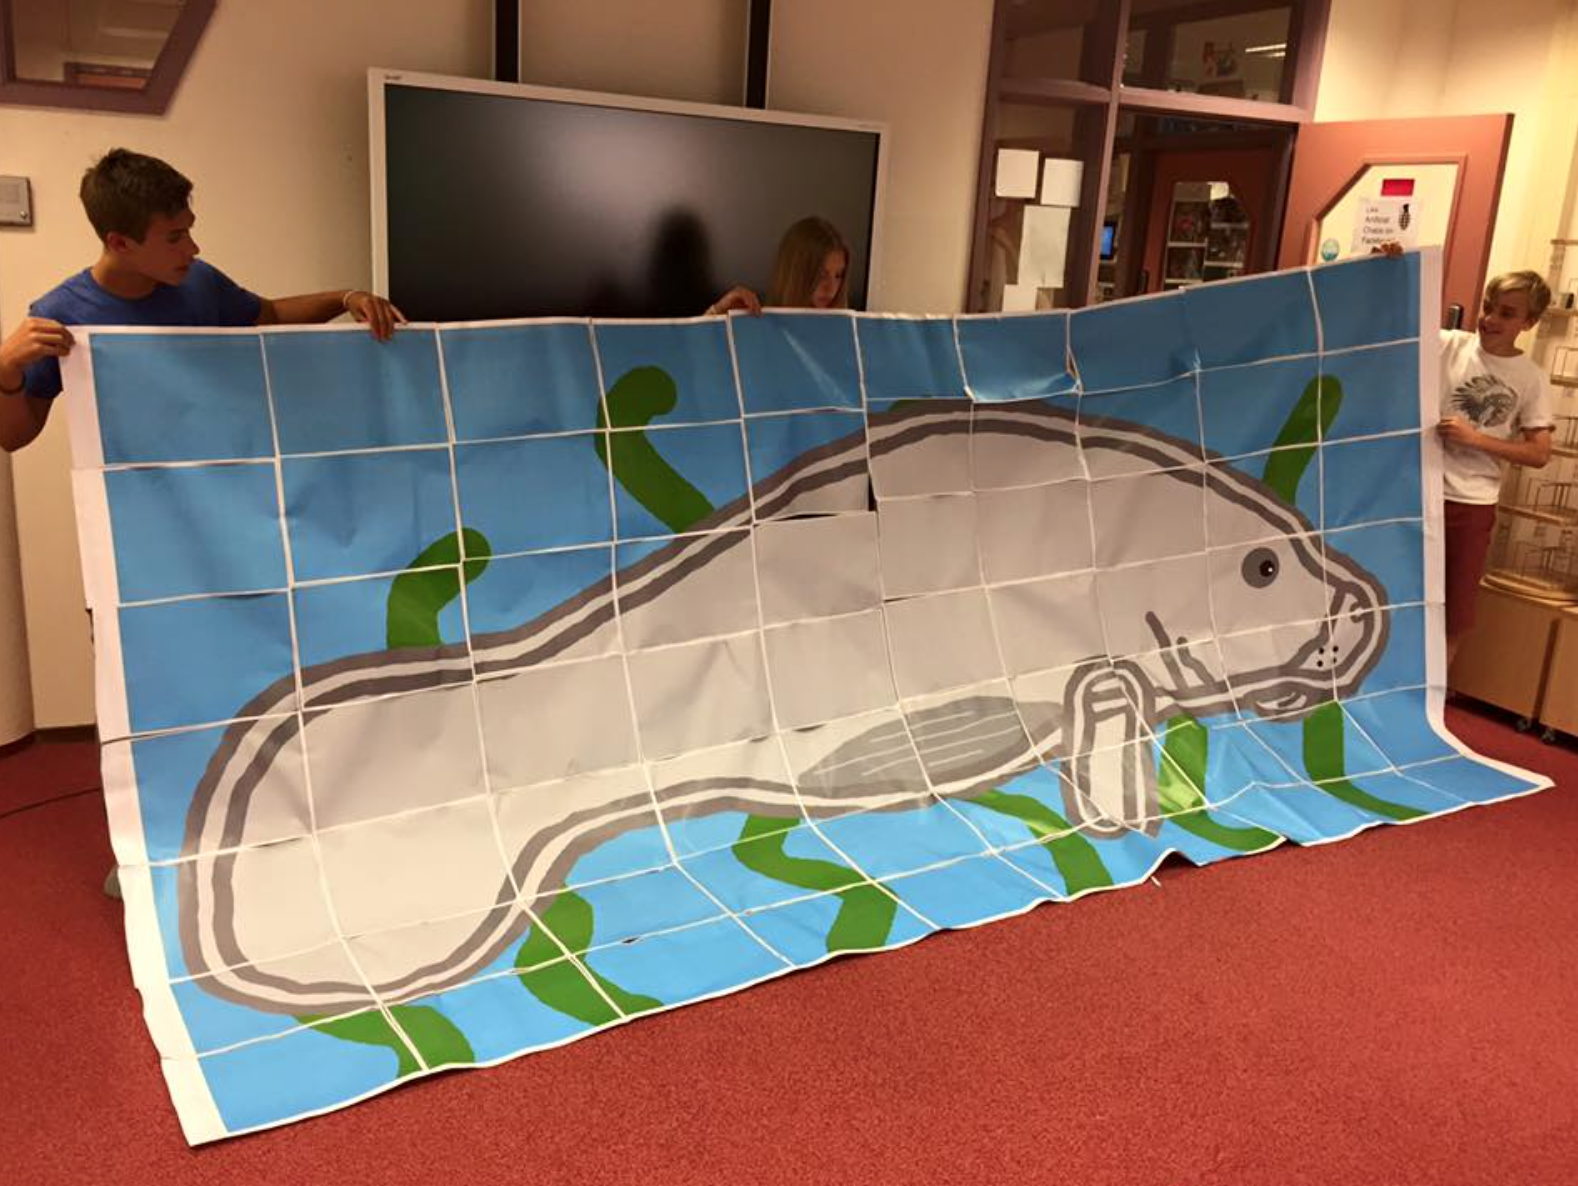 Turns out a dugong is an Australian manatee